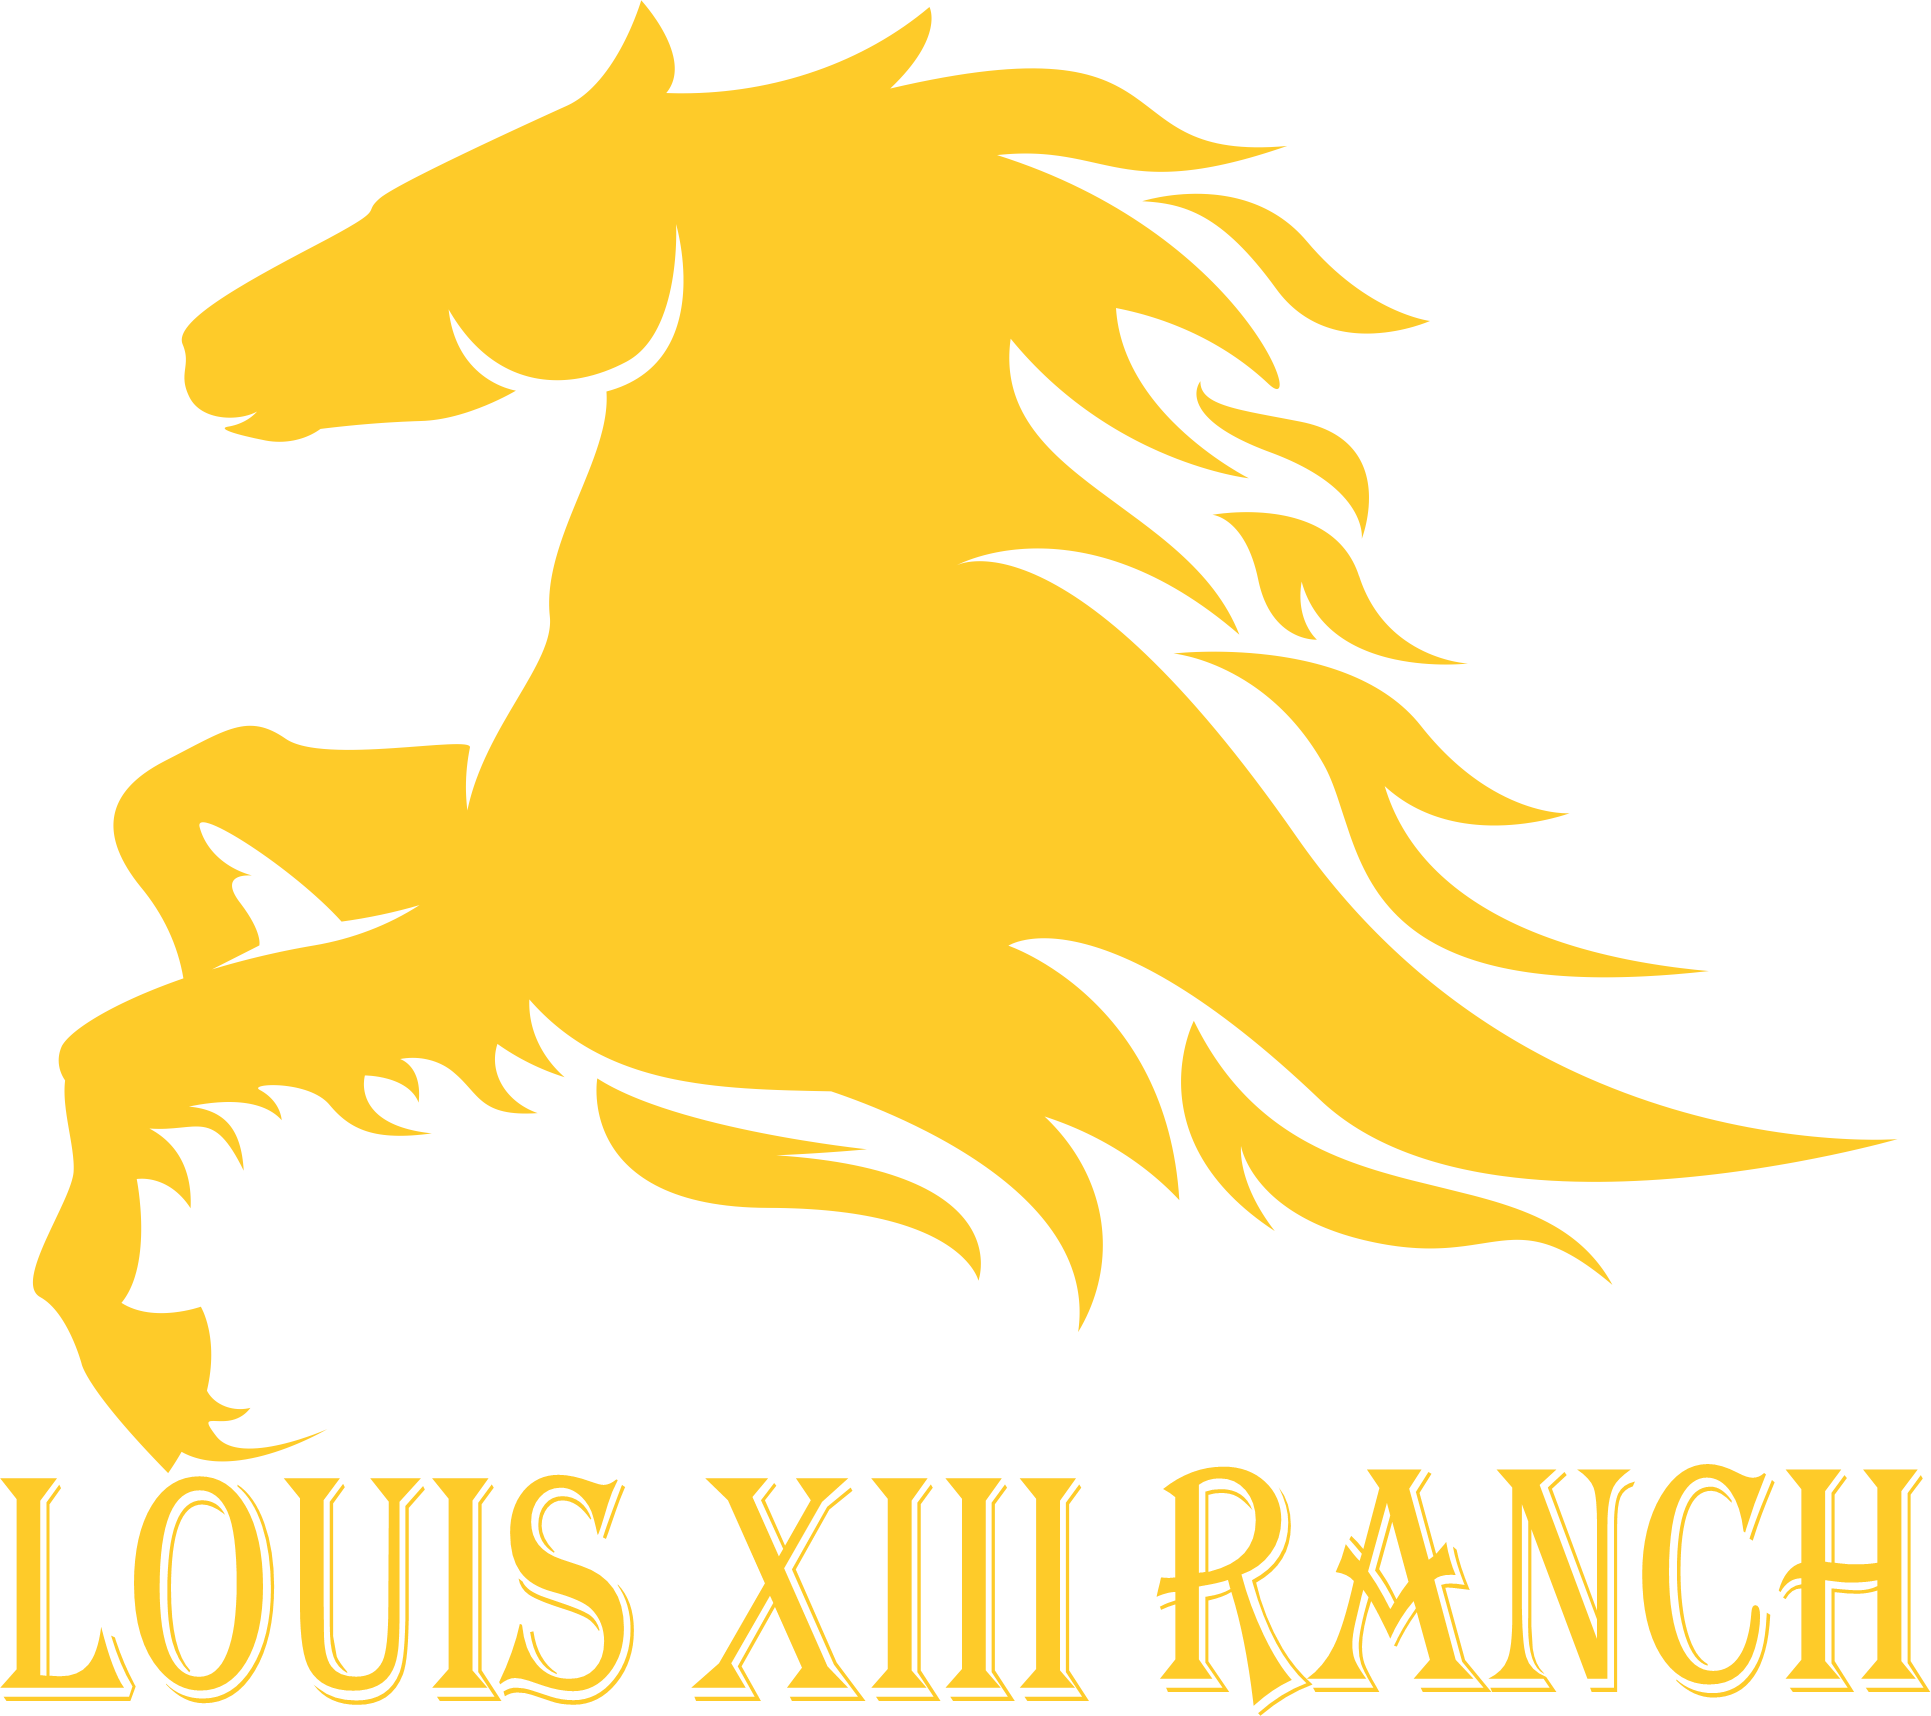 Louis XIII Ranch